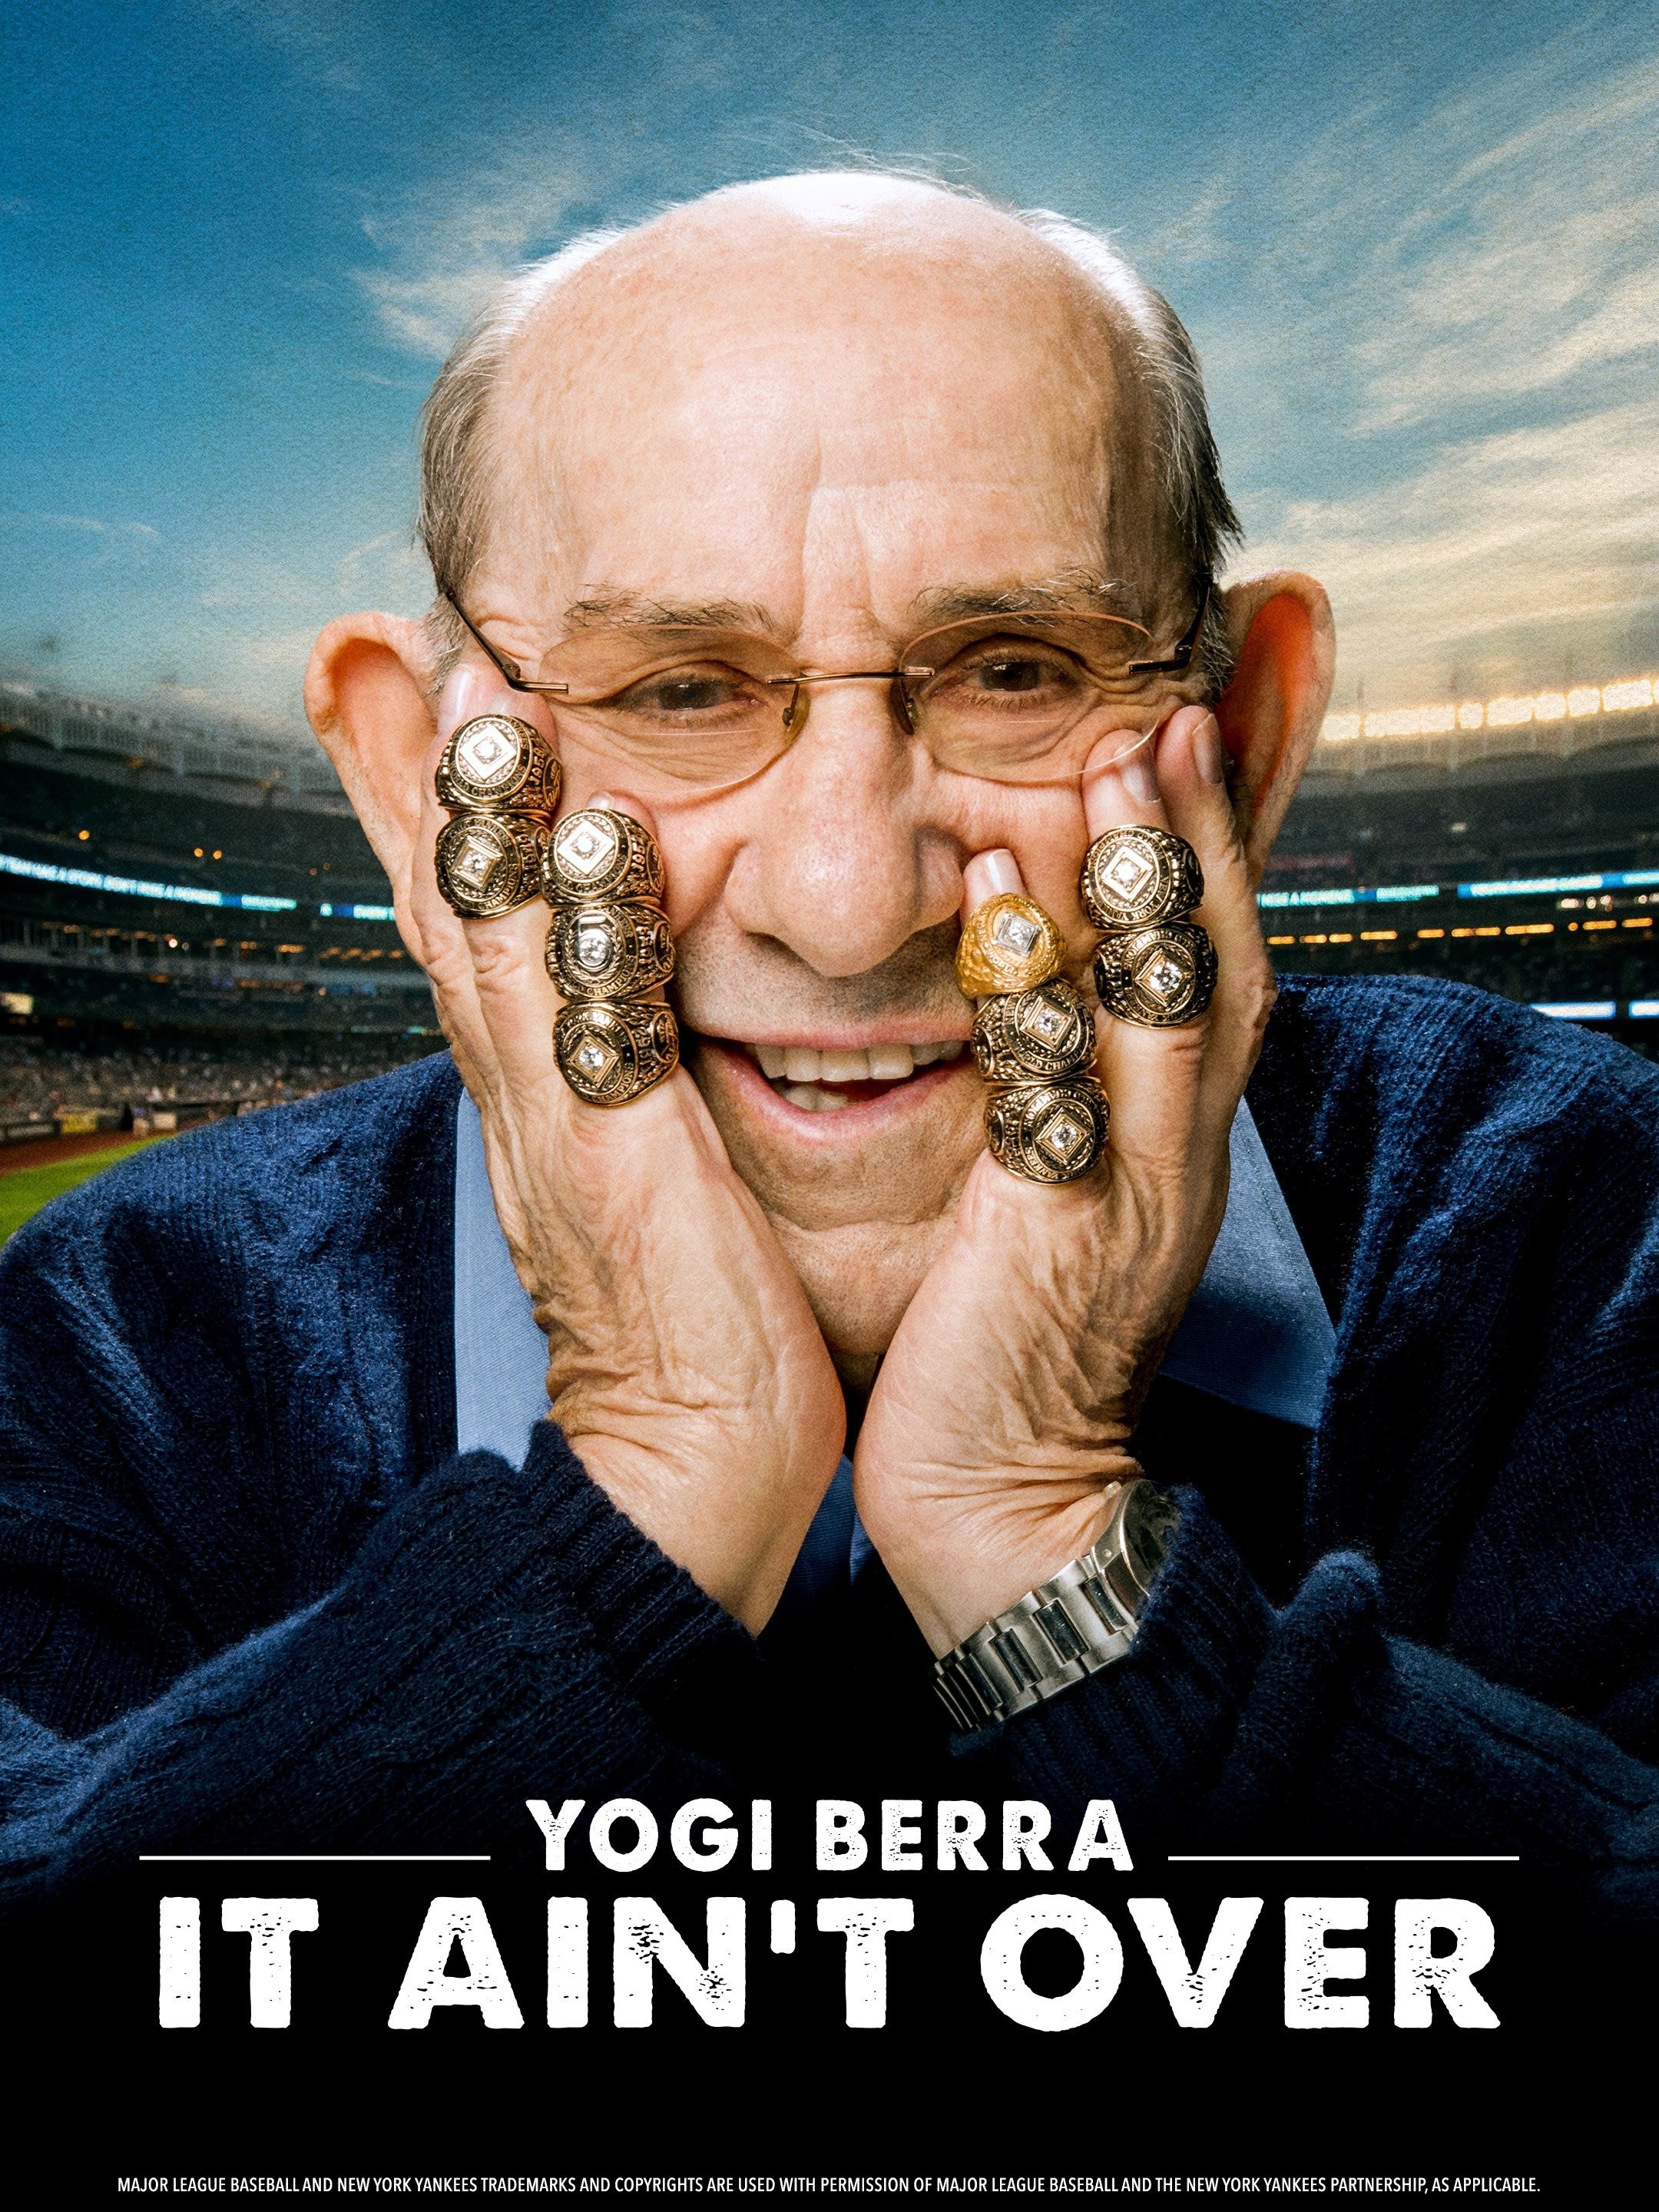 Yogi Berra: Biography, Statistics, Quotes, & Facts